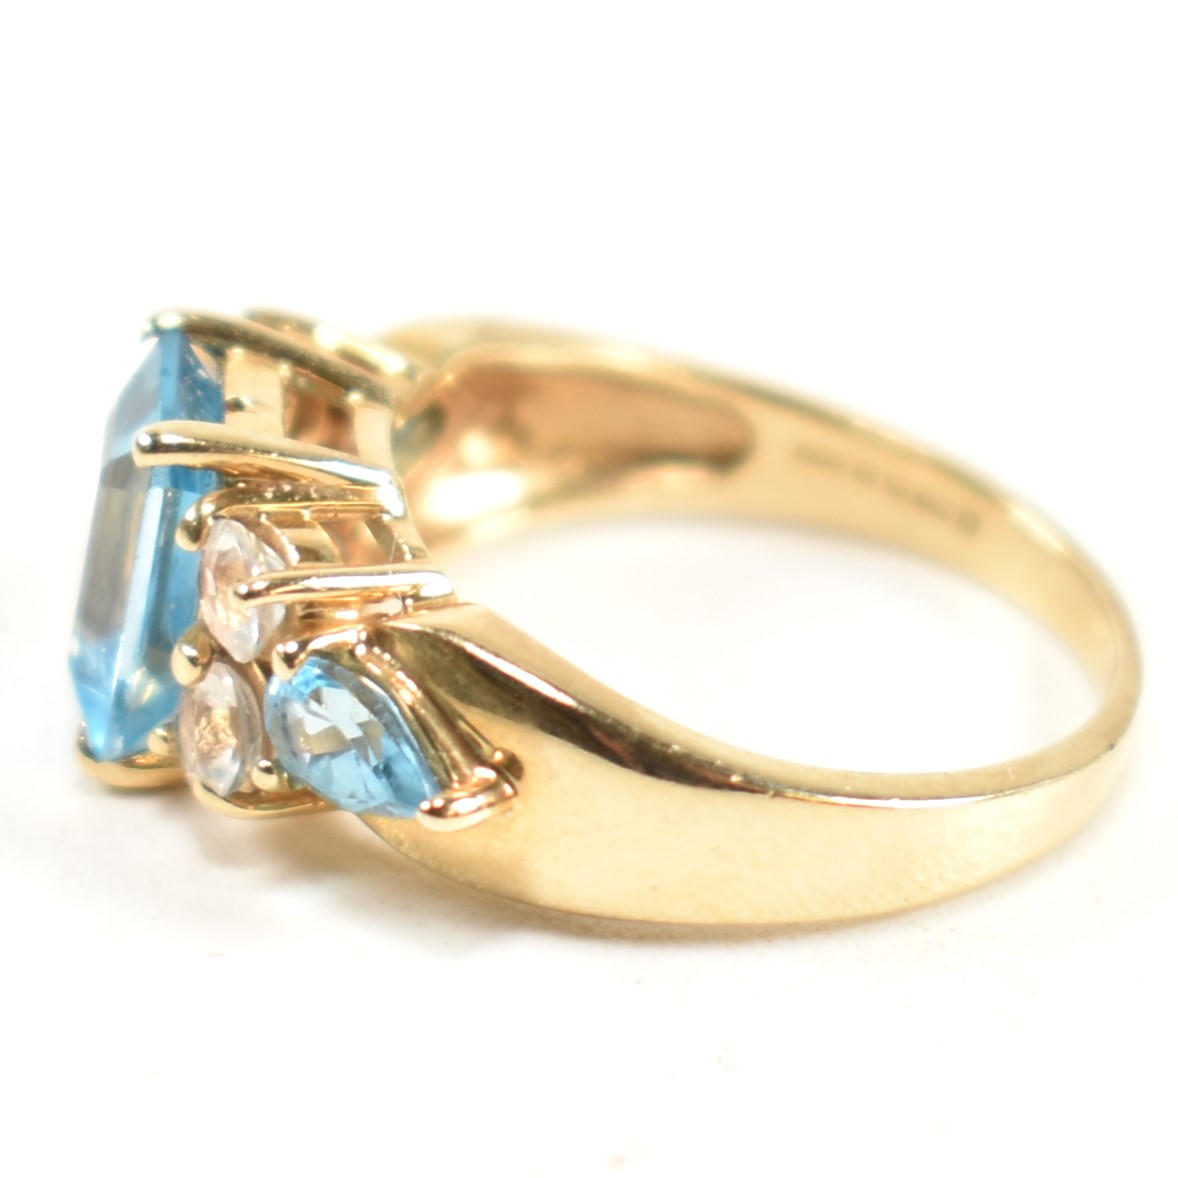 HALLMARKED 9CT GOLD & BLUE & WHITE TOPAZ RING - Image 7 of 8